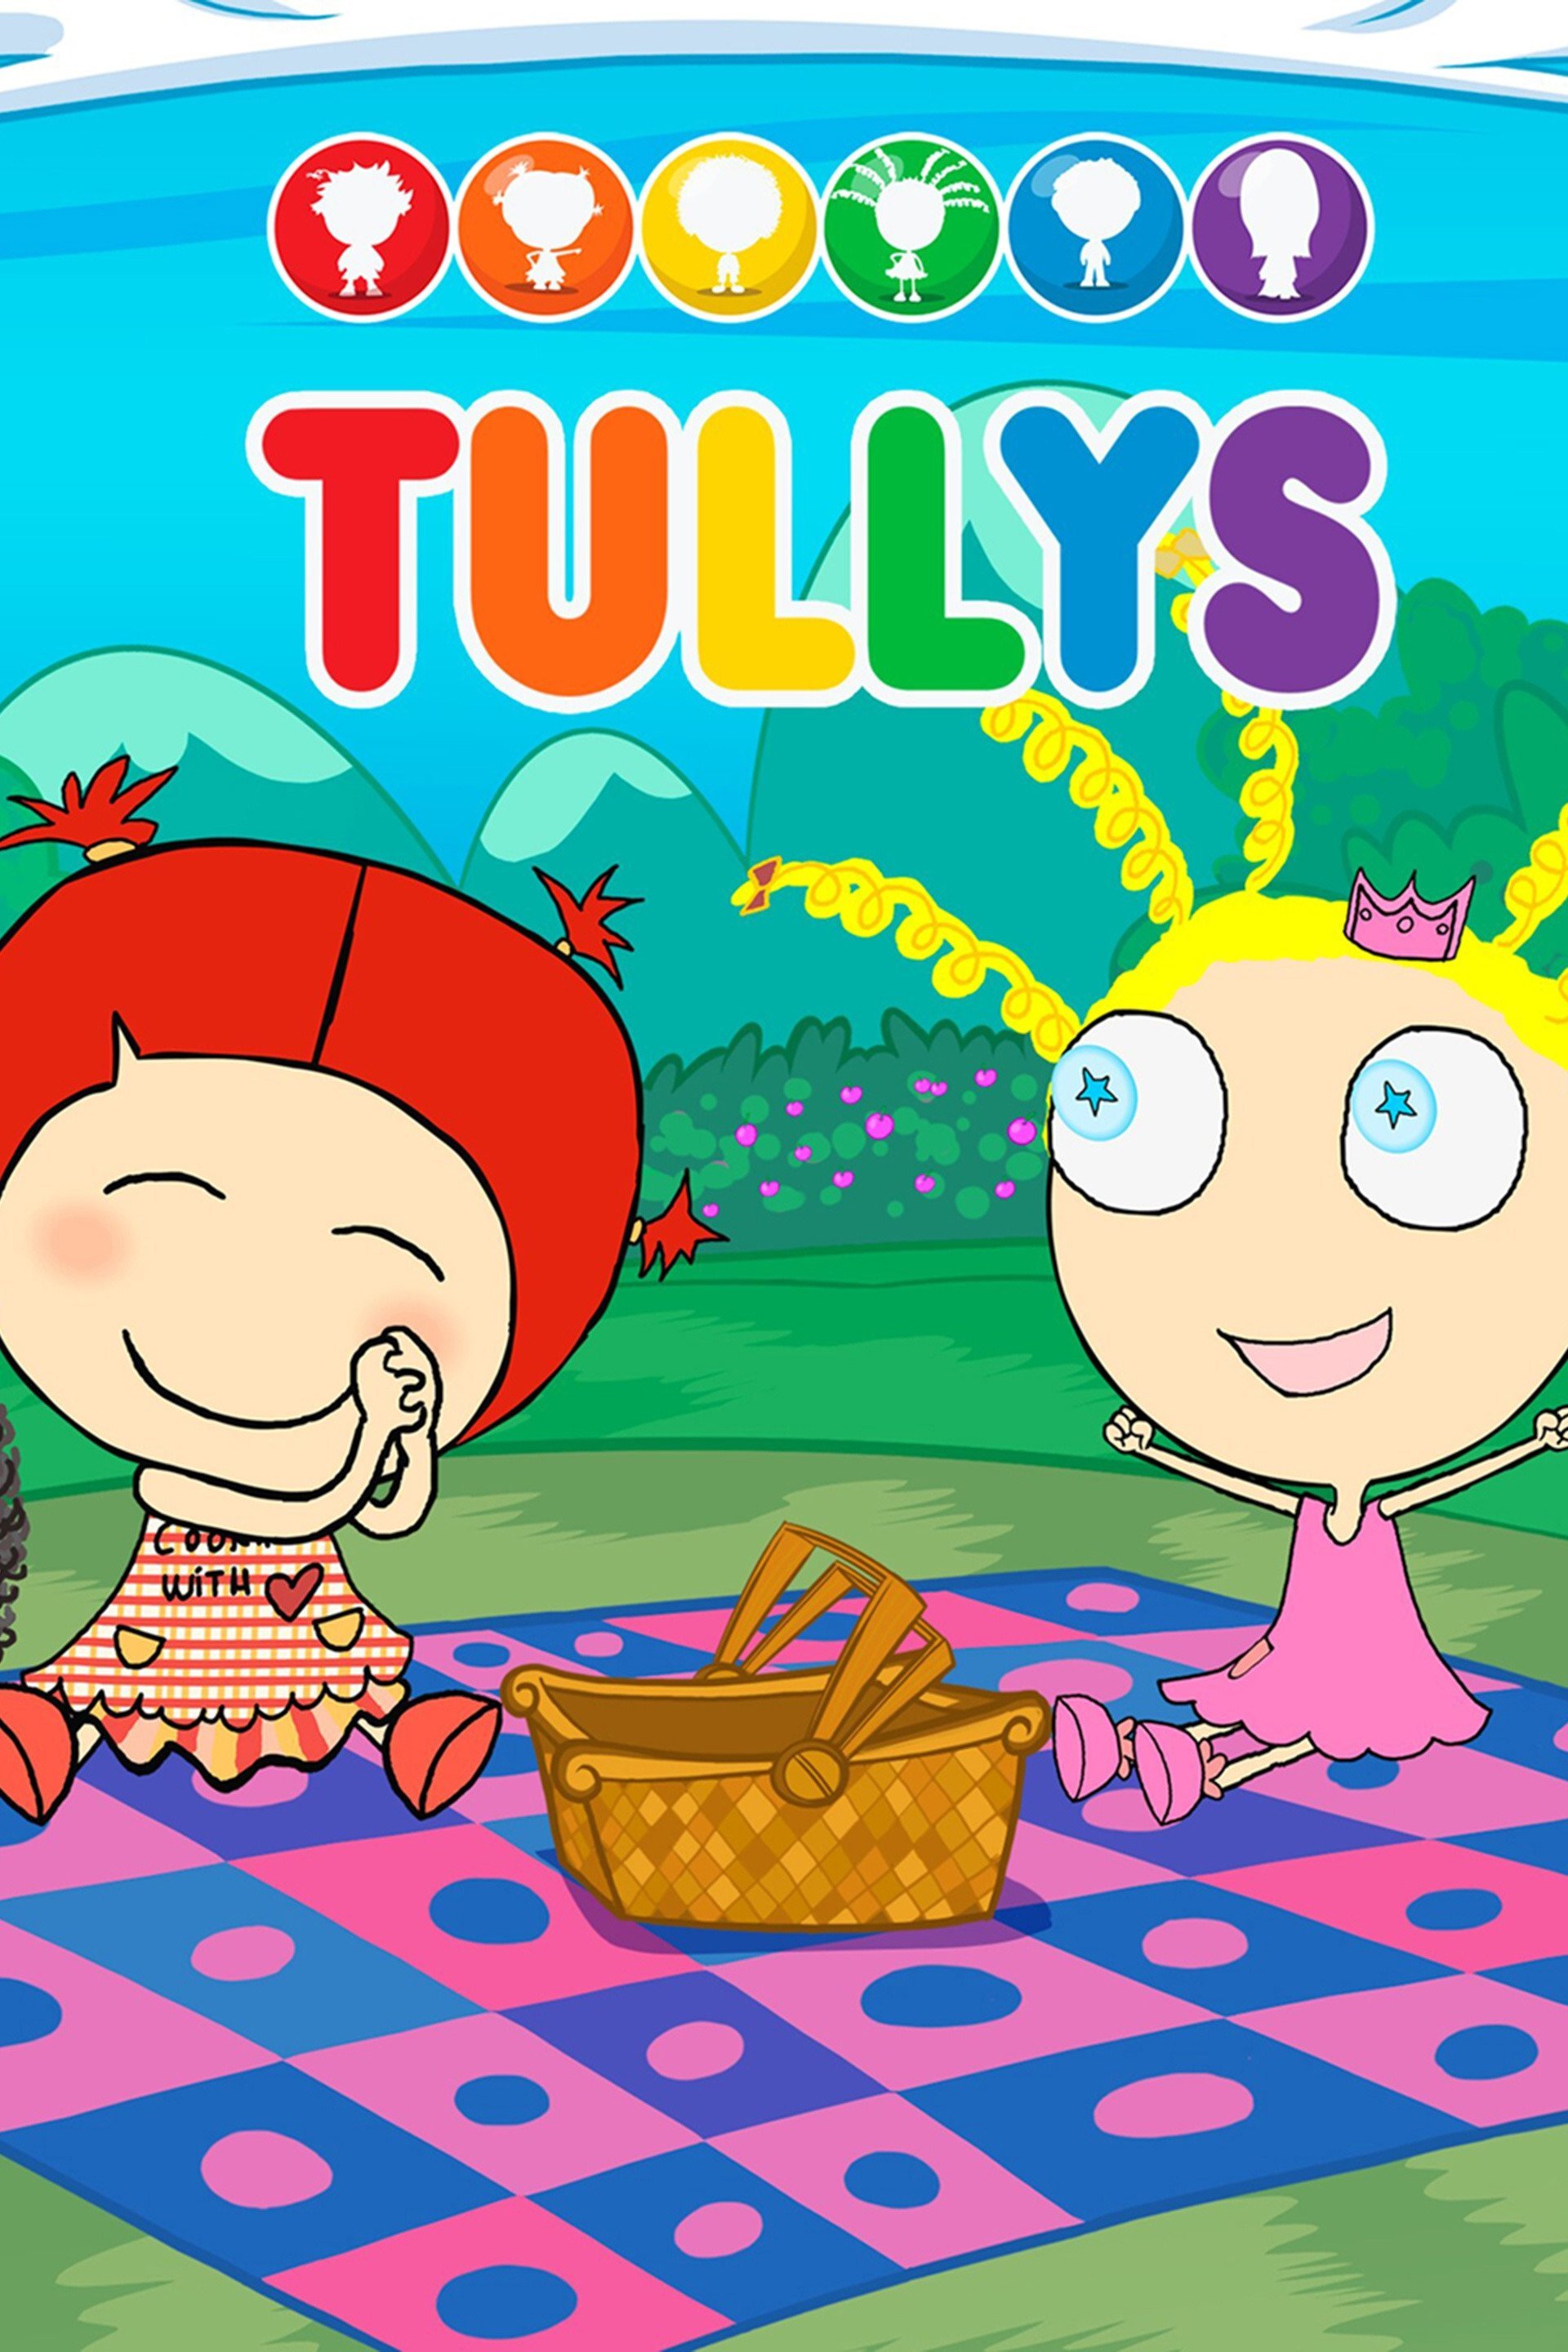 Tullys